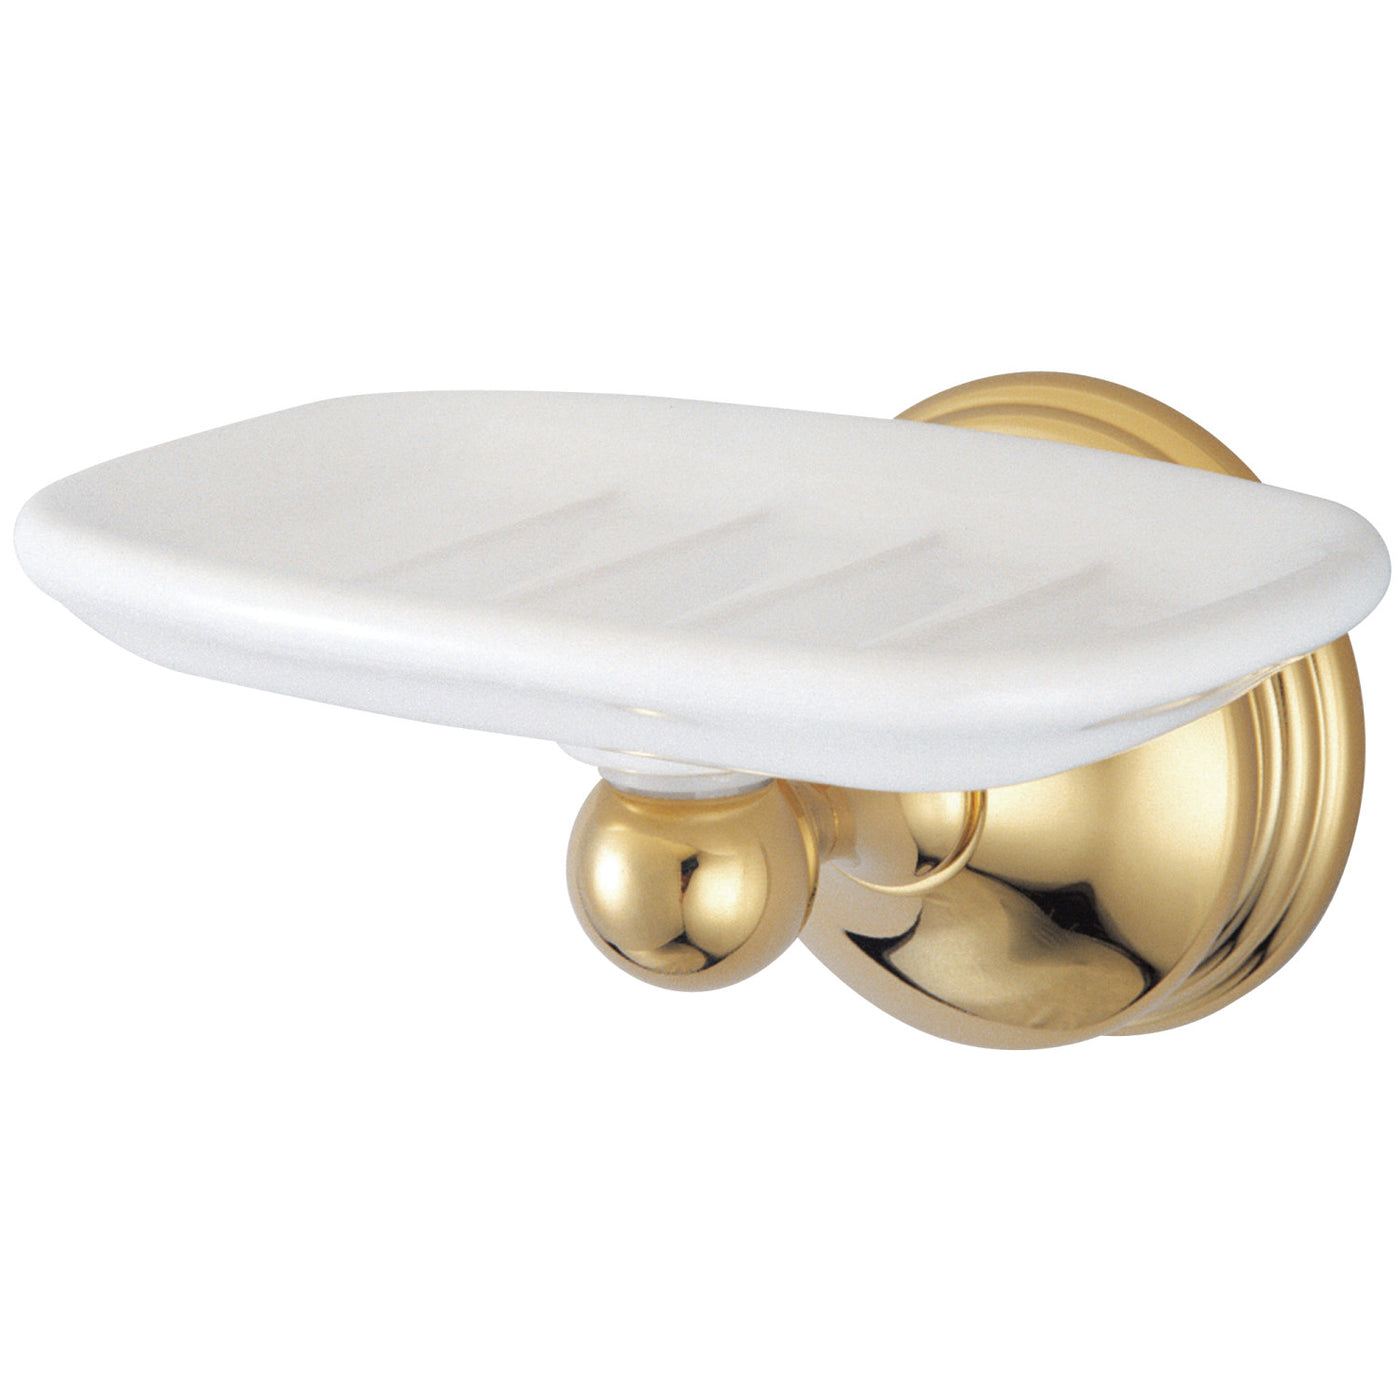 Elements of Design EBA1165PB Wall-Mount Soap Dish Holder, Polished Brass